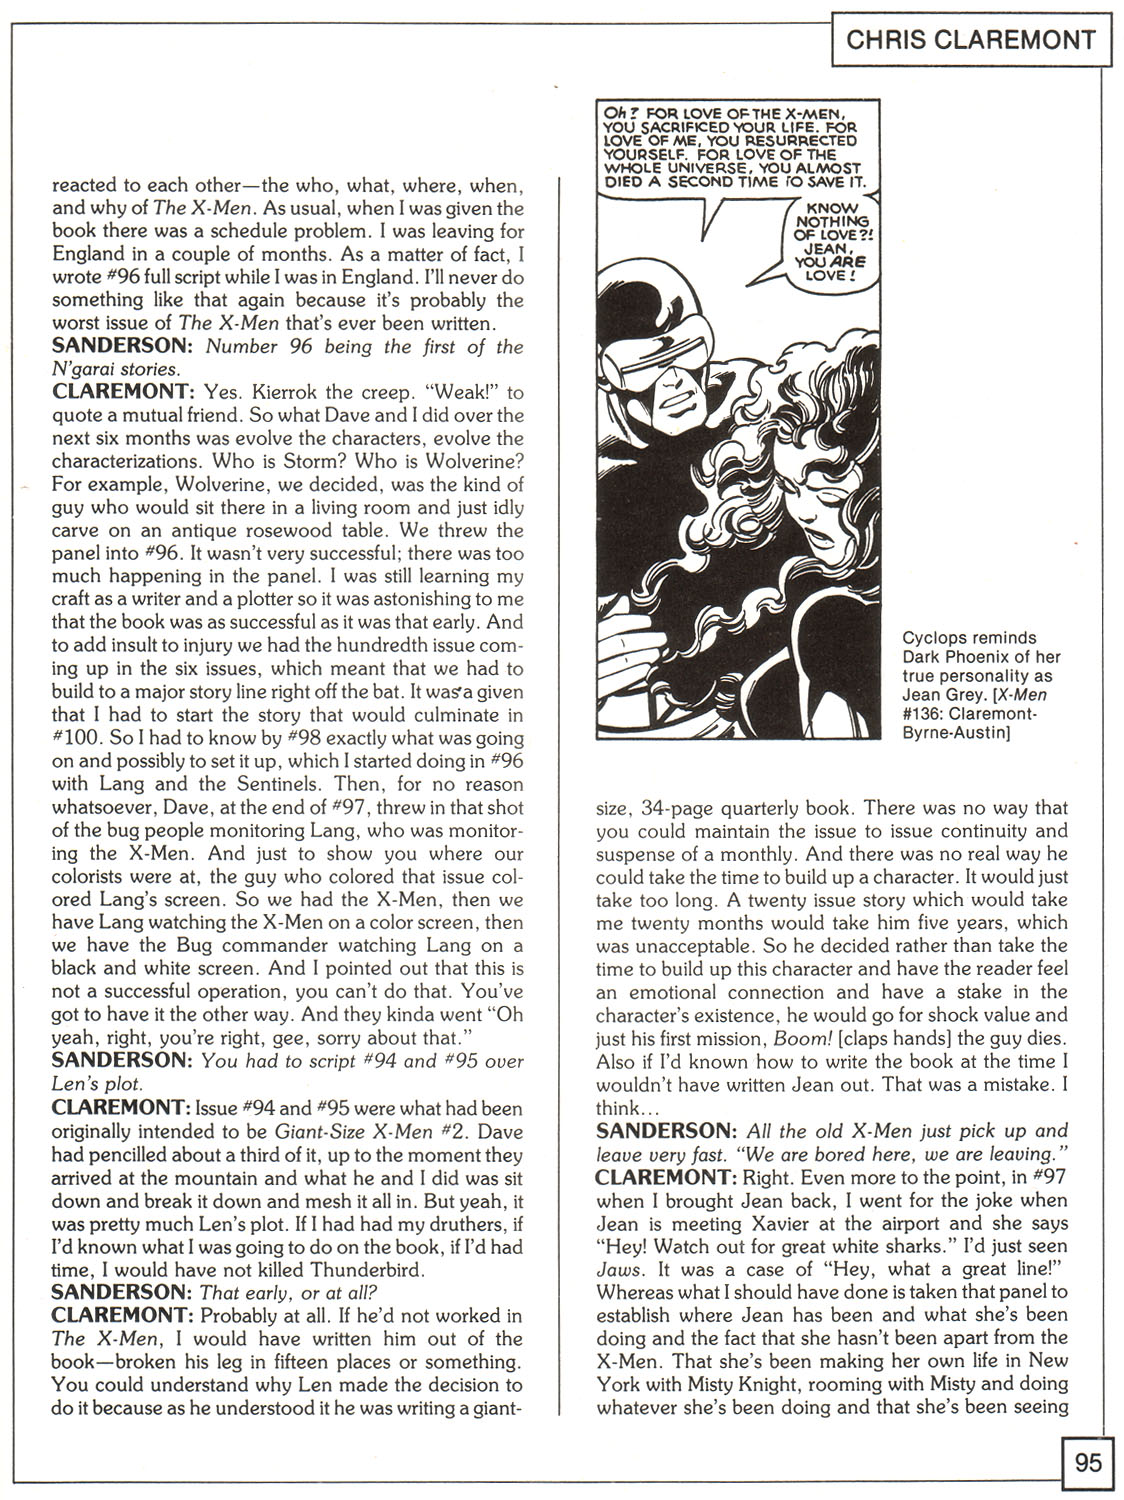 Read online The X-Men Companion comic -  Issue #1 - 95